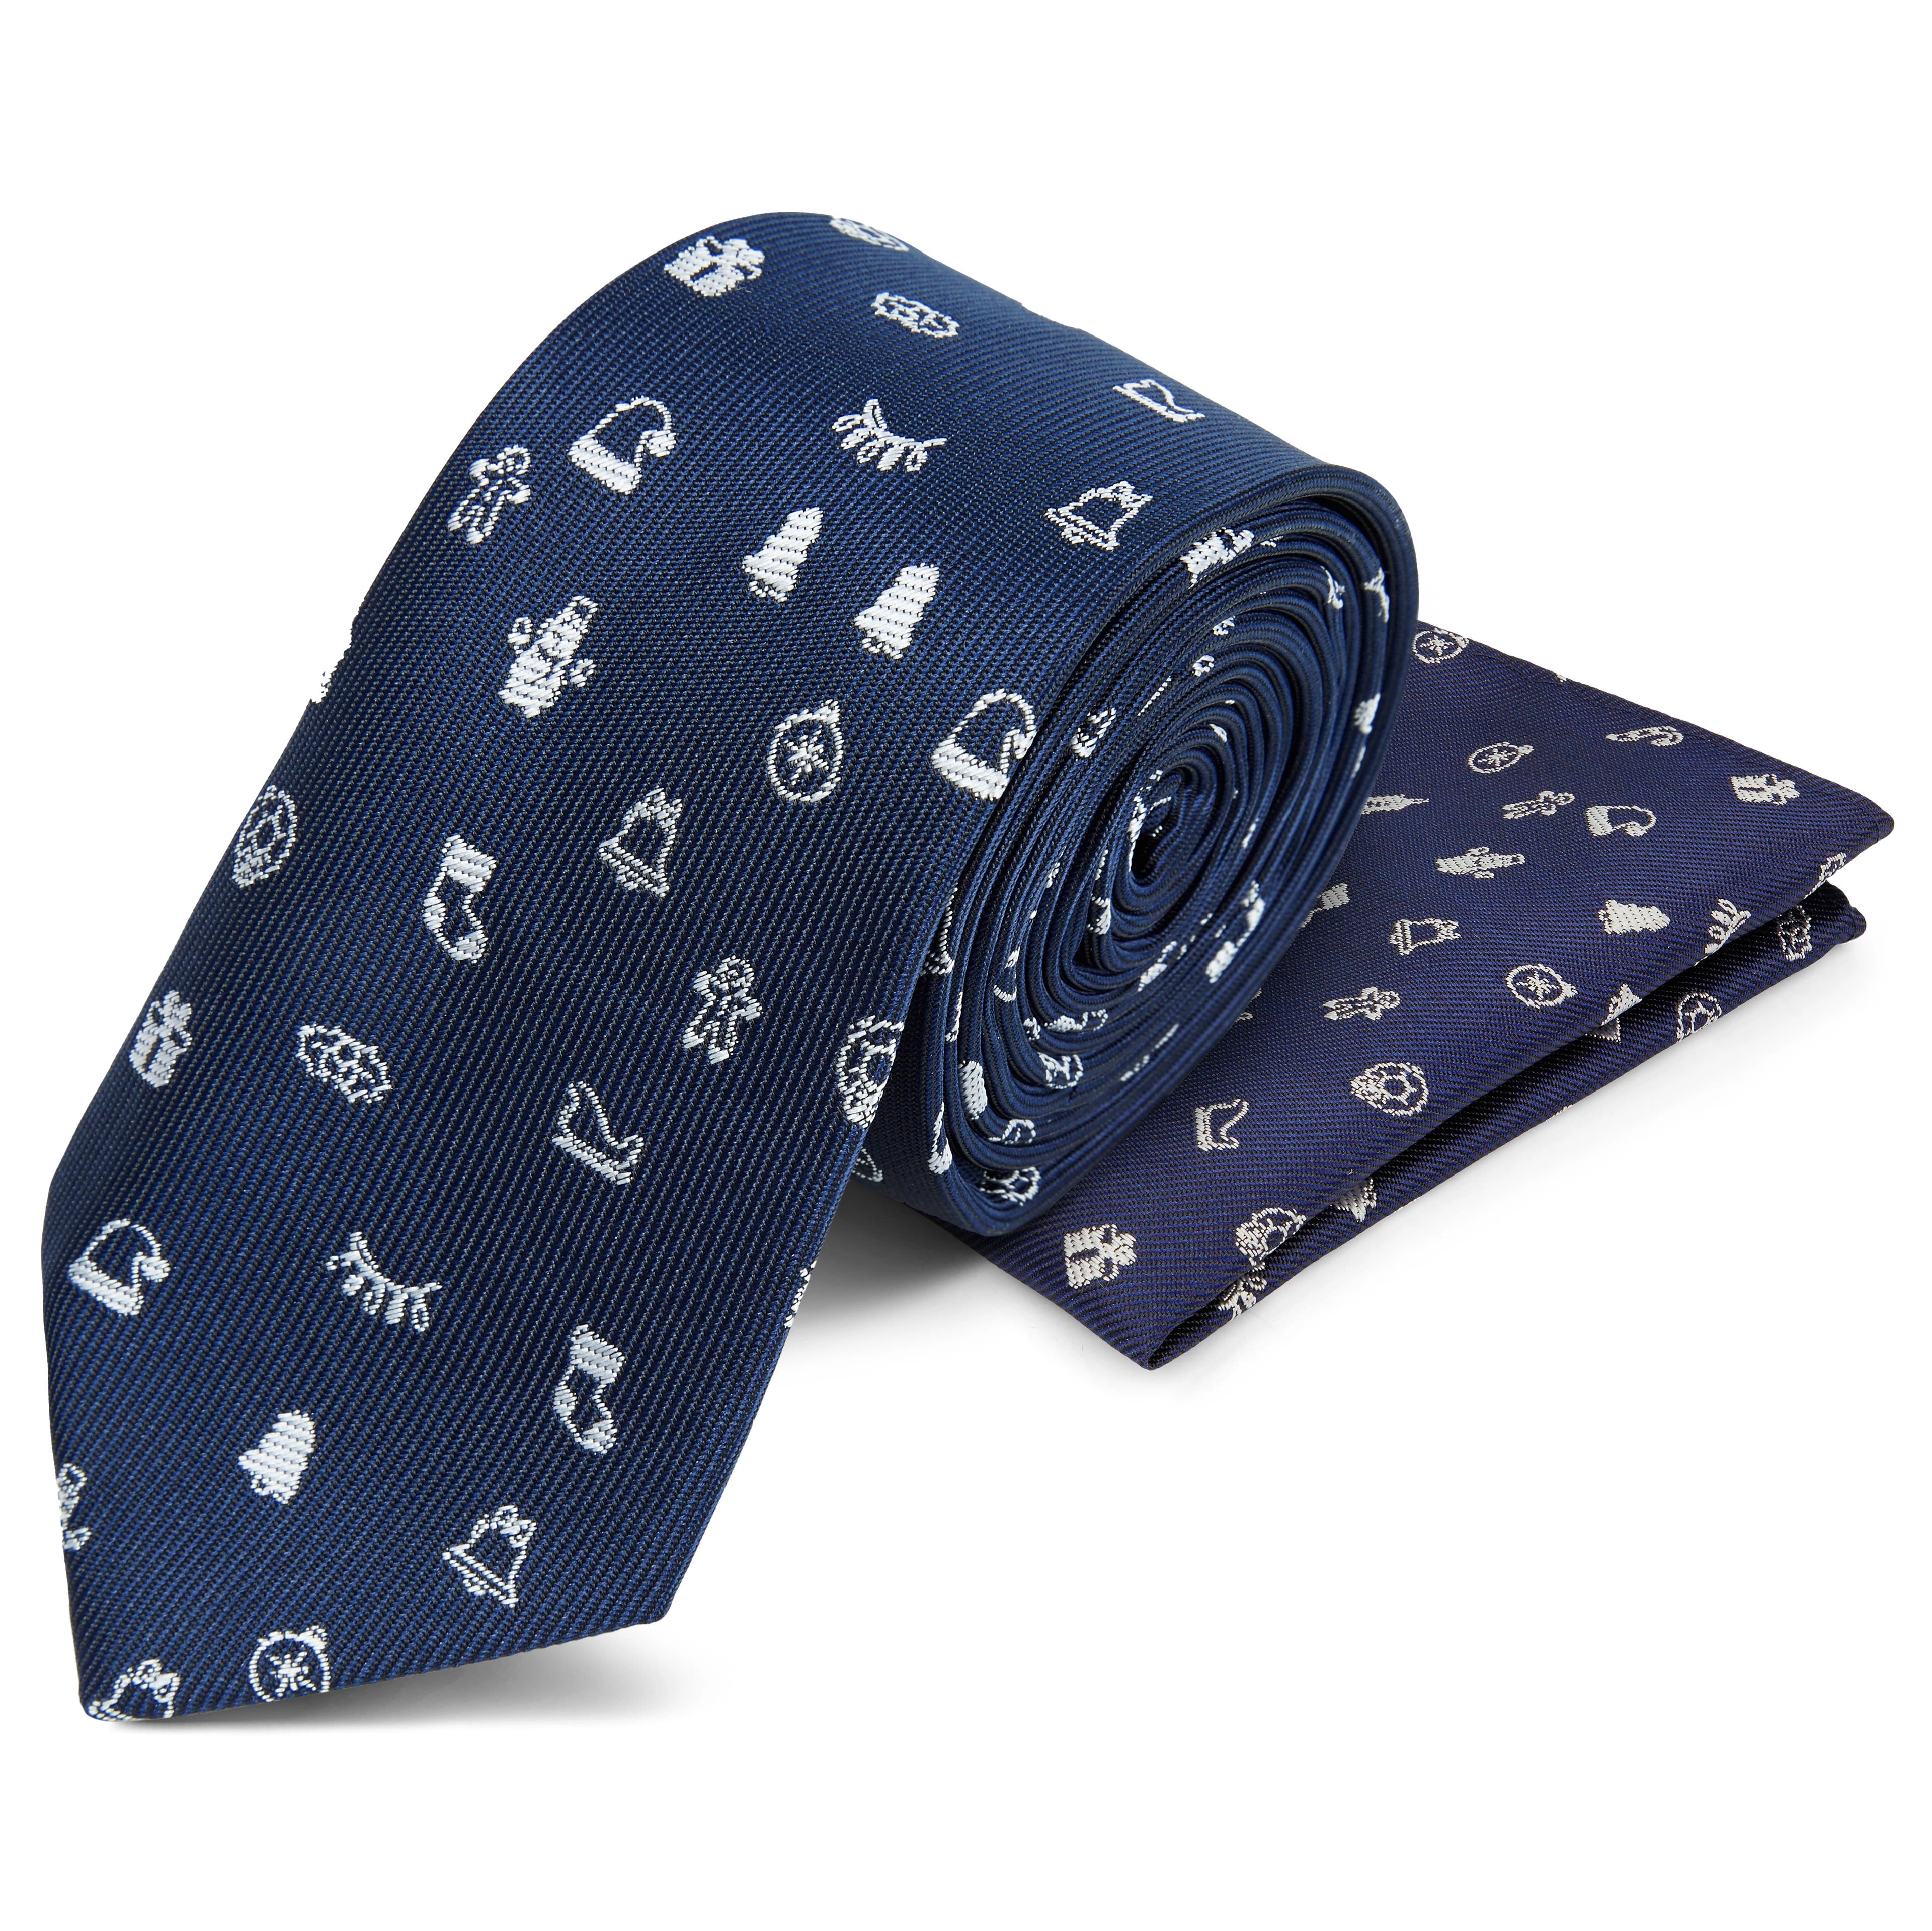 Cravatta e fazzoletto da taschino blu navy a tema natalizio